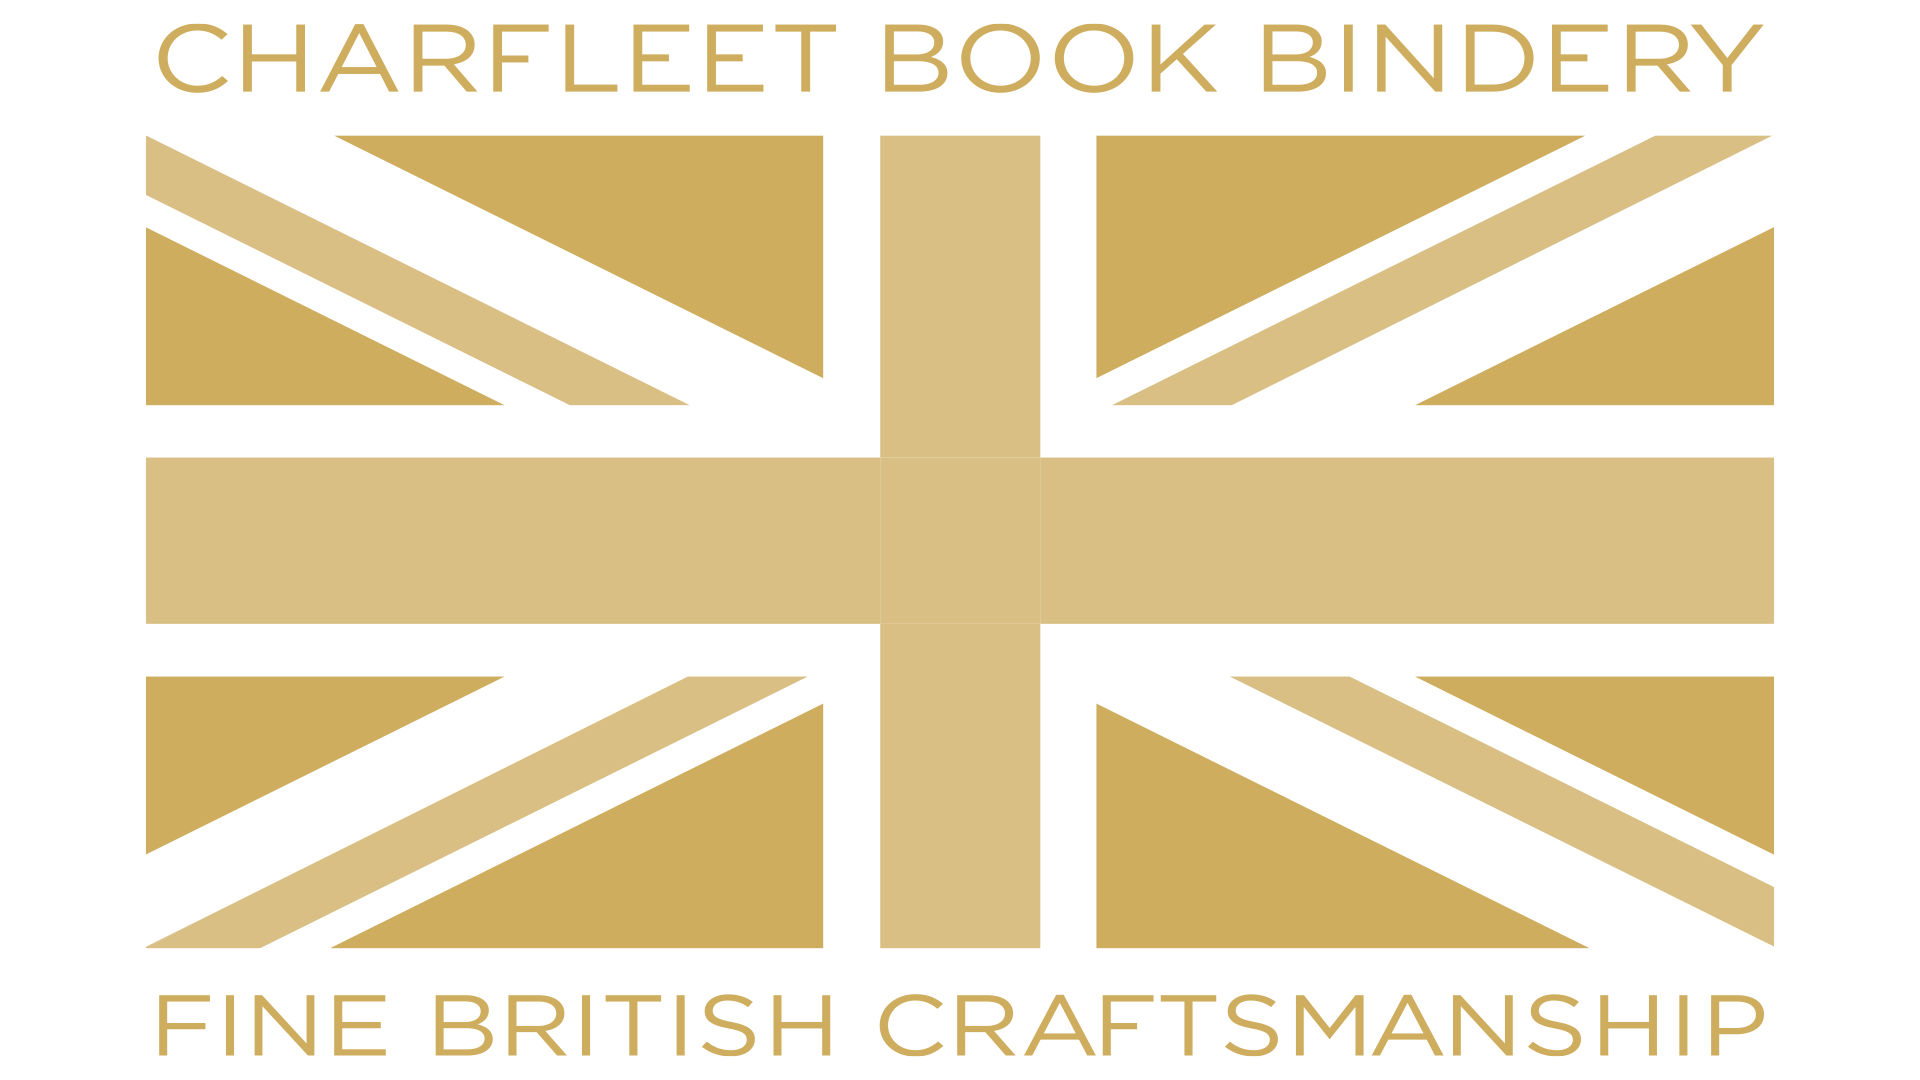 Charfleet Book Bindery